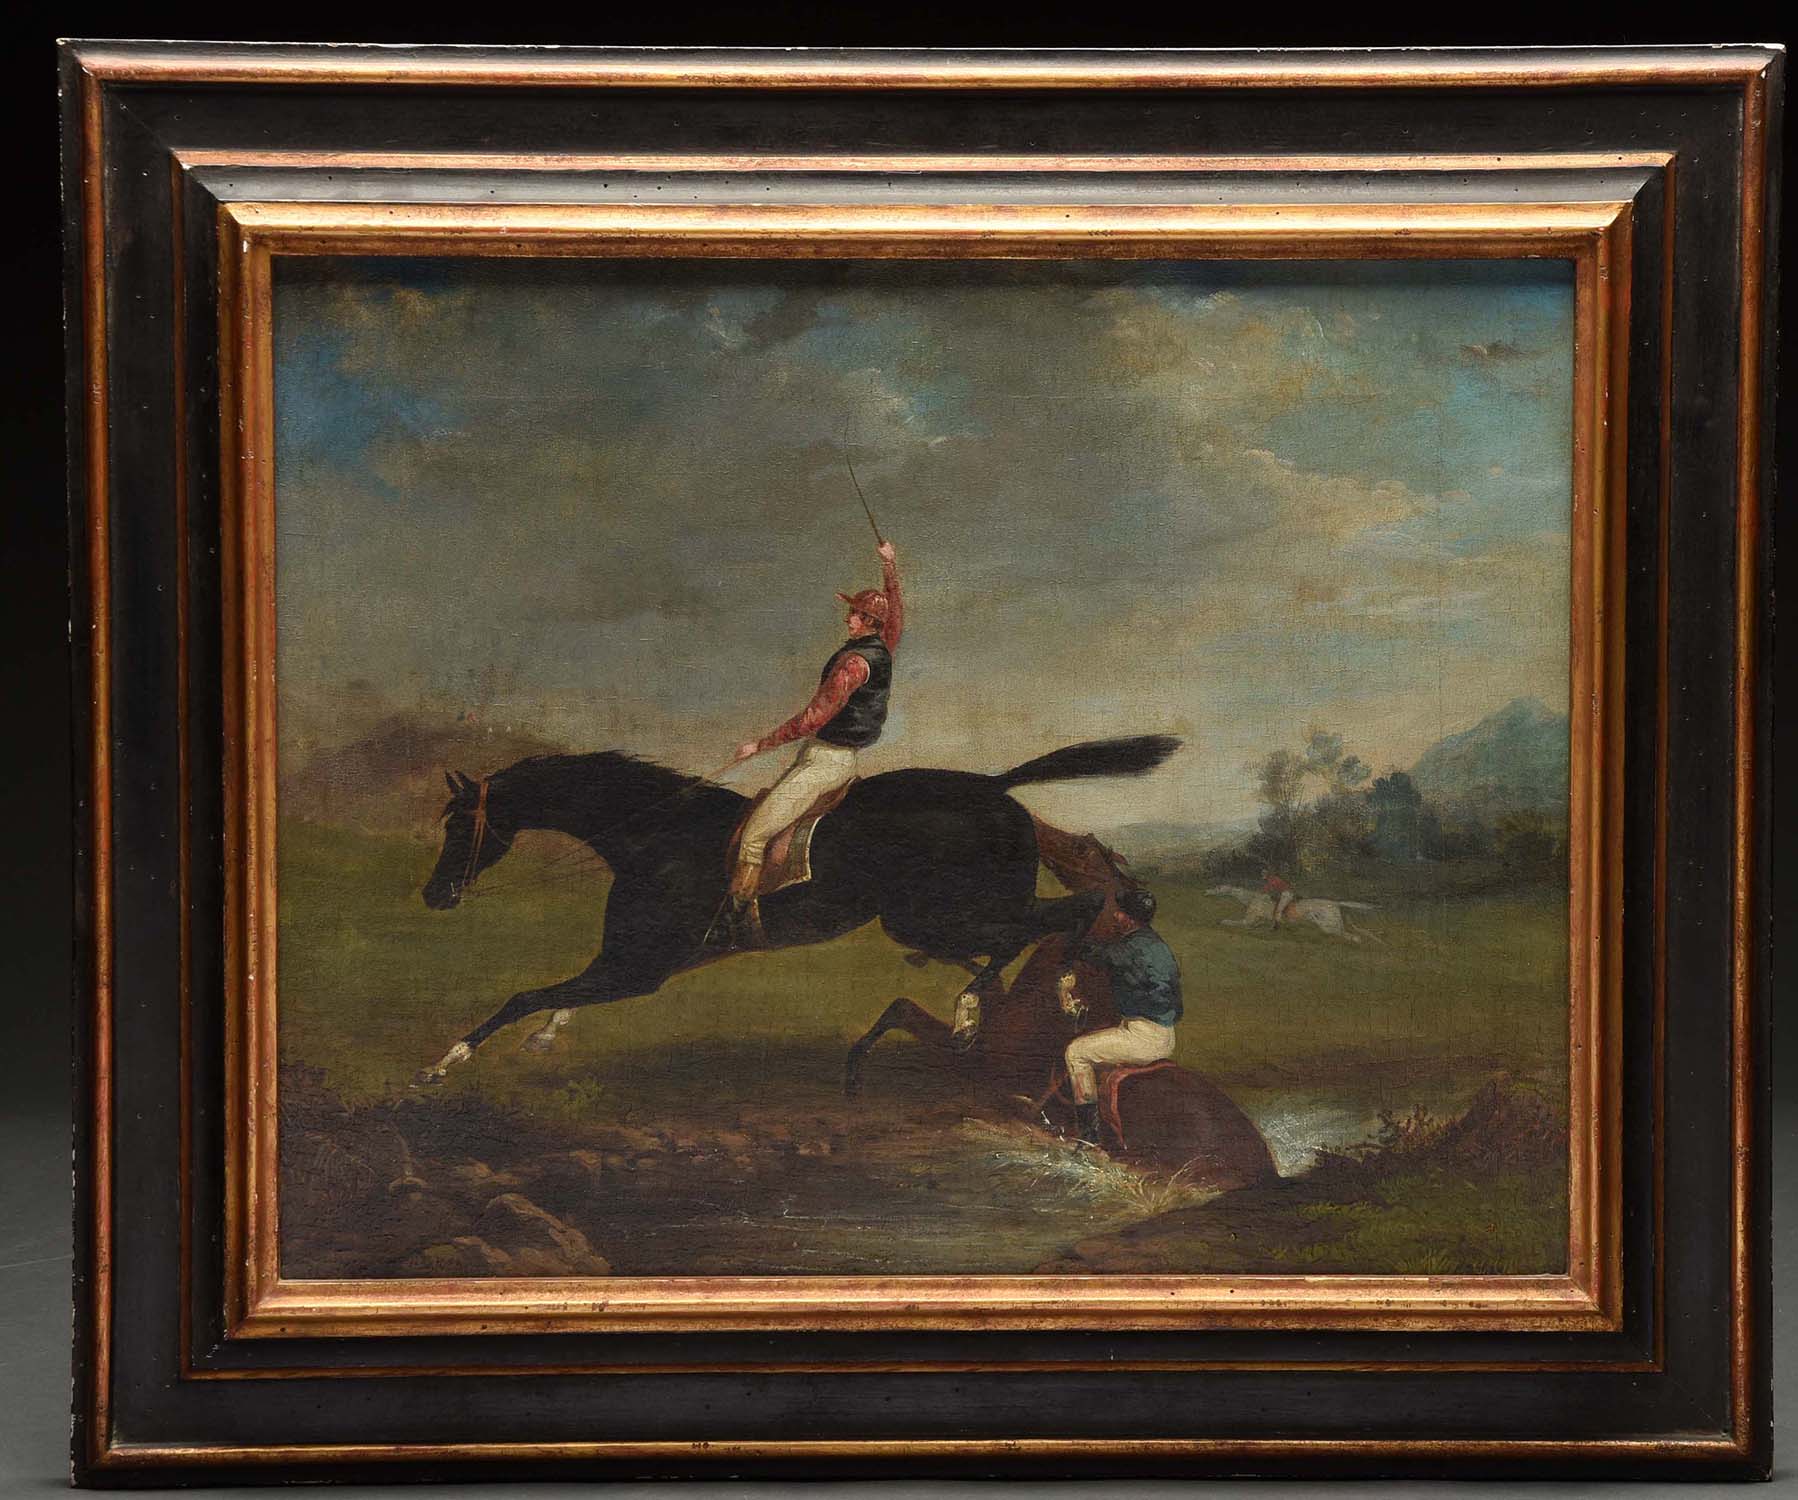 R.D. Willard Horses Painting, estimated at $3,000-5,000.